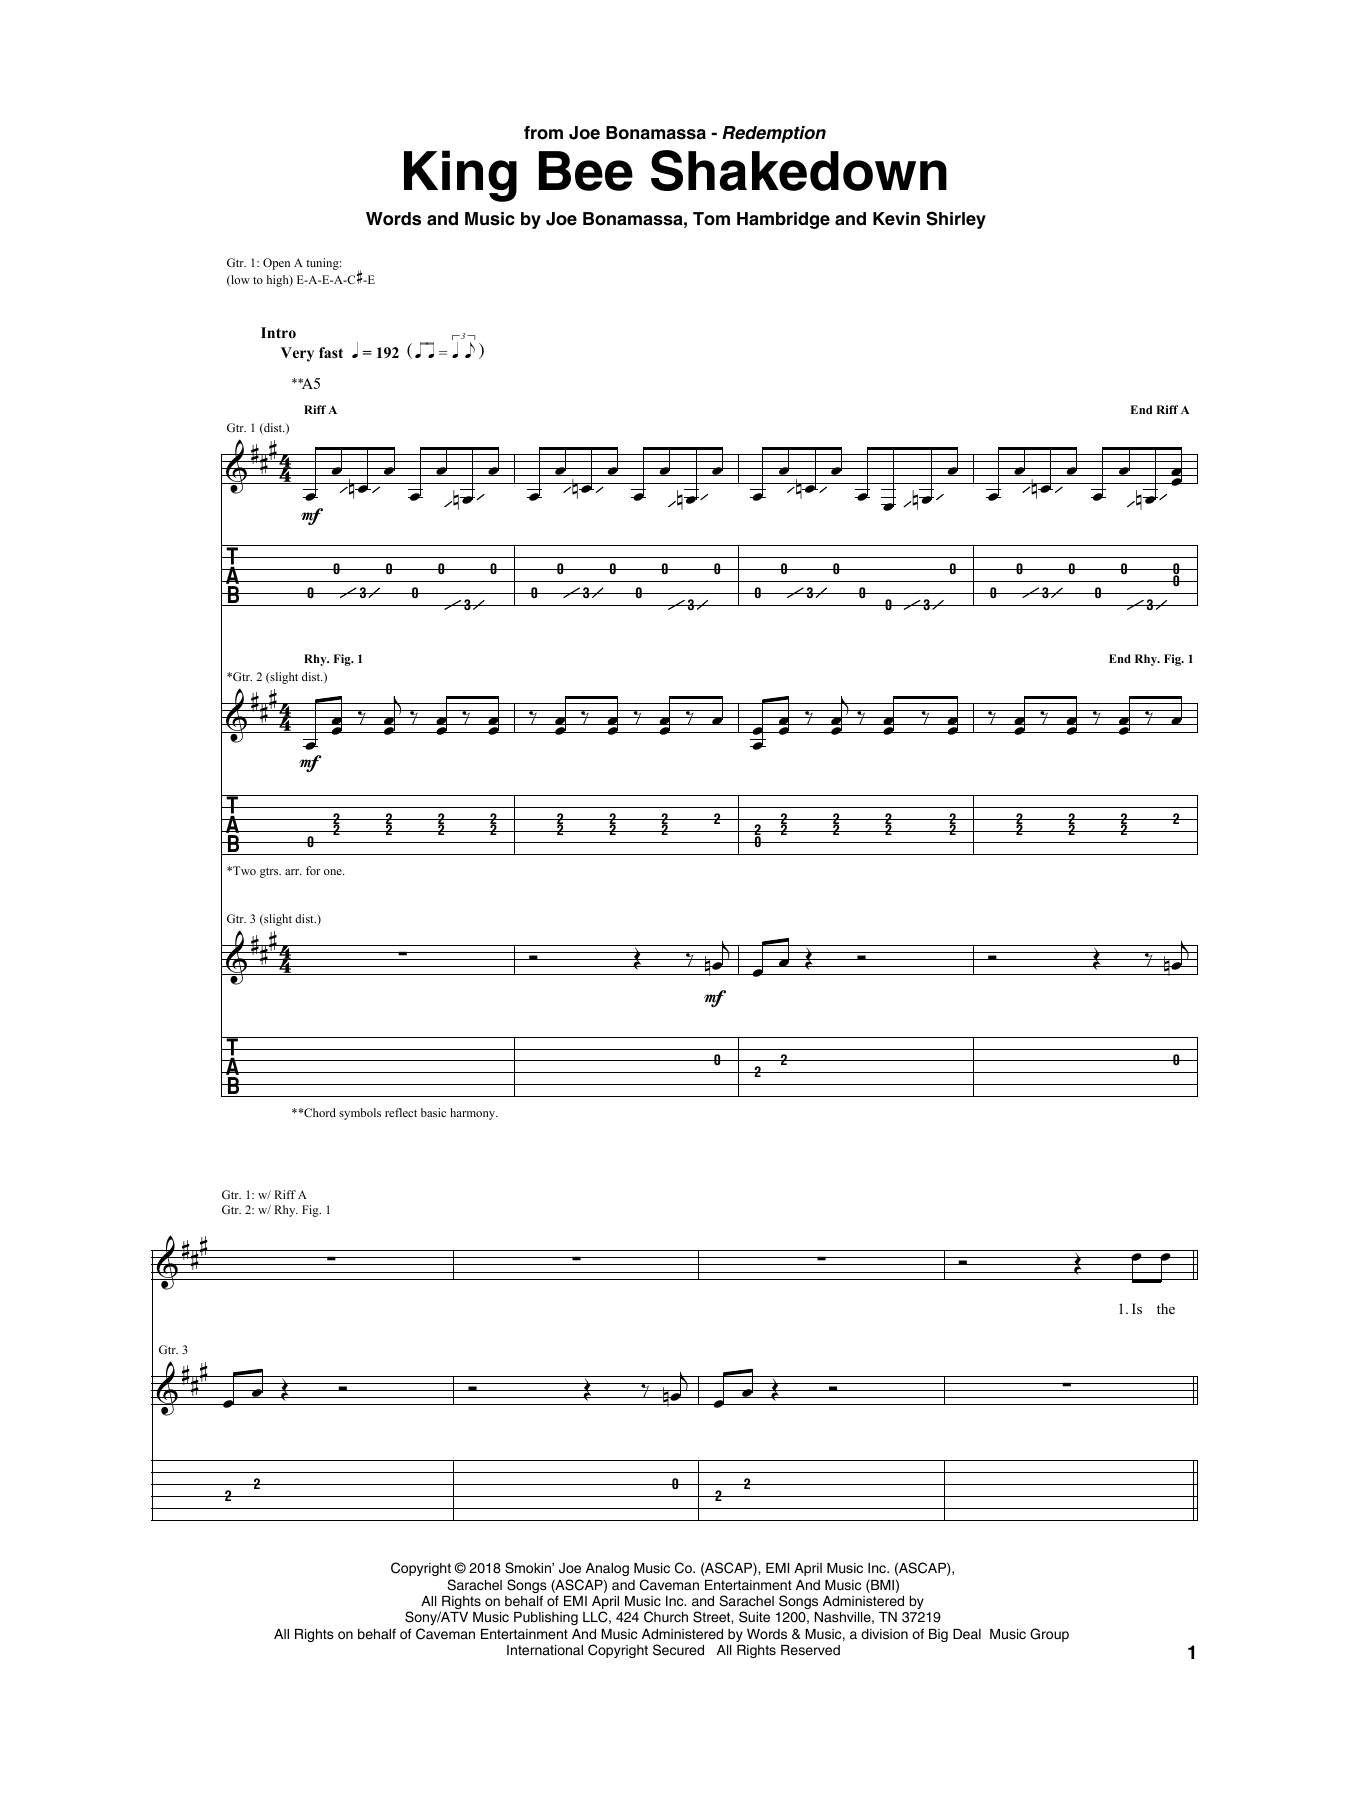 Download Joe Bonamassa King Bee Shakedown Sheet Music and learn how to play Guitar Tab PDF digital score in minutes